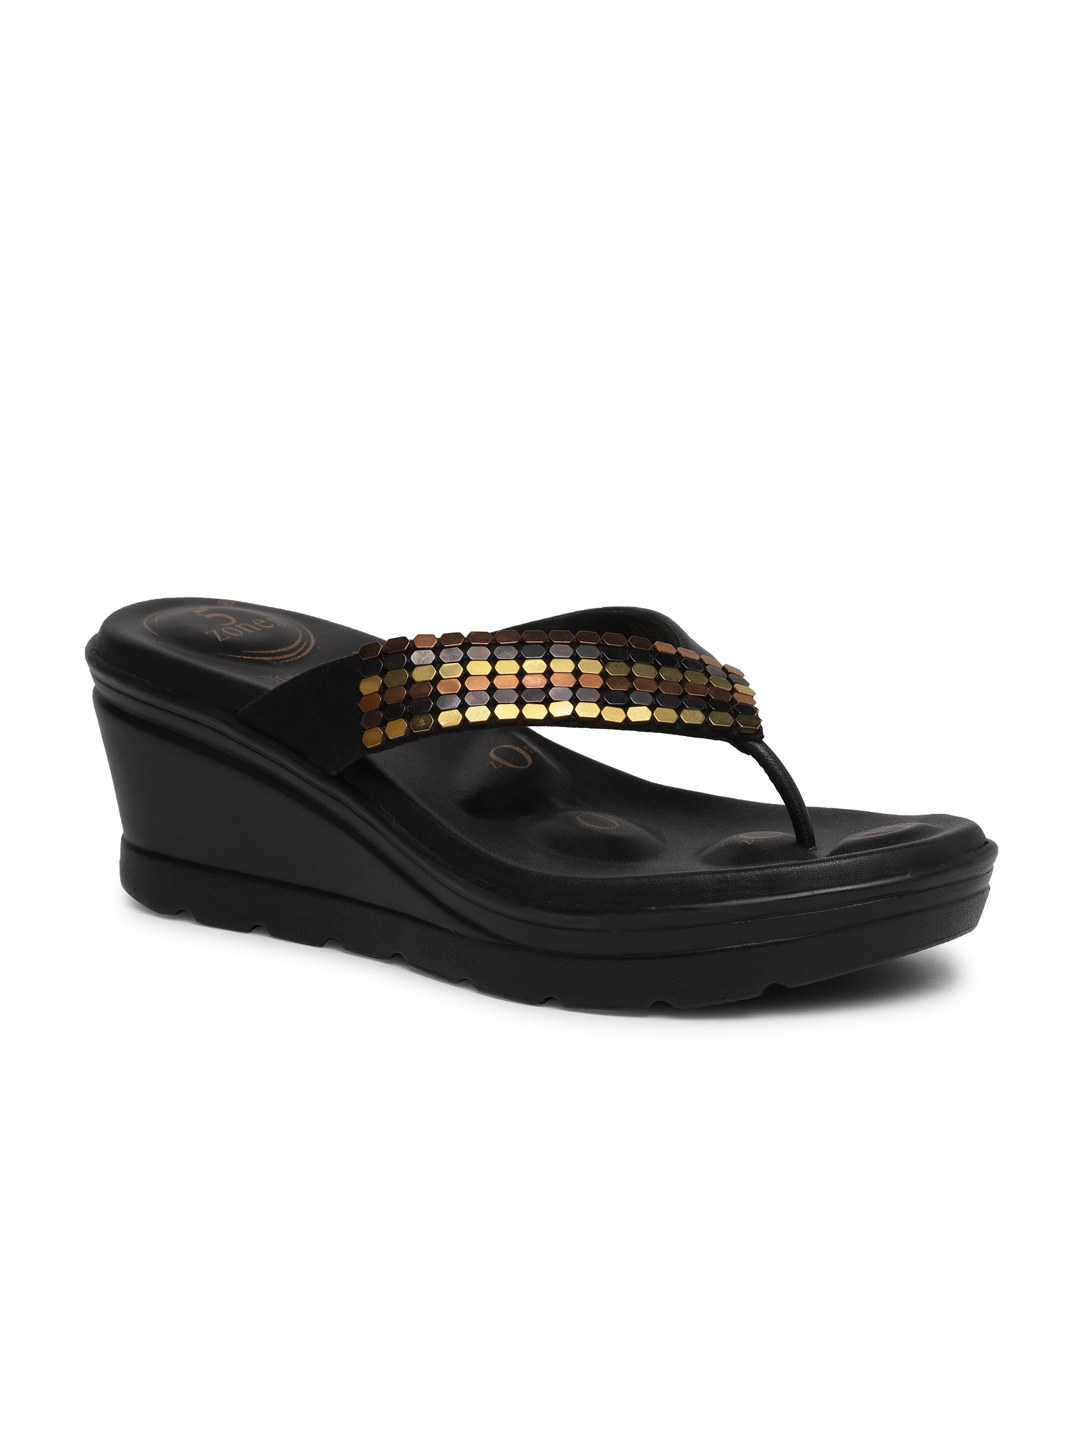 Buy Von Wellx Germany Comfort Women's Black Casual Slippers Karl Online in Saudi Arabia